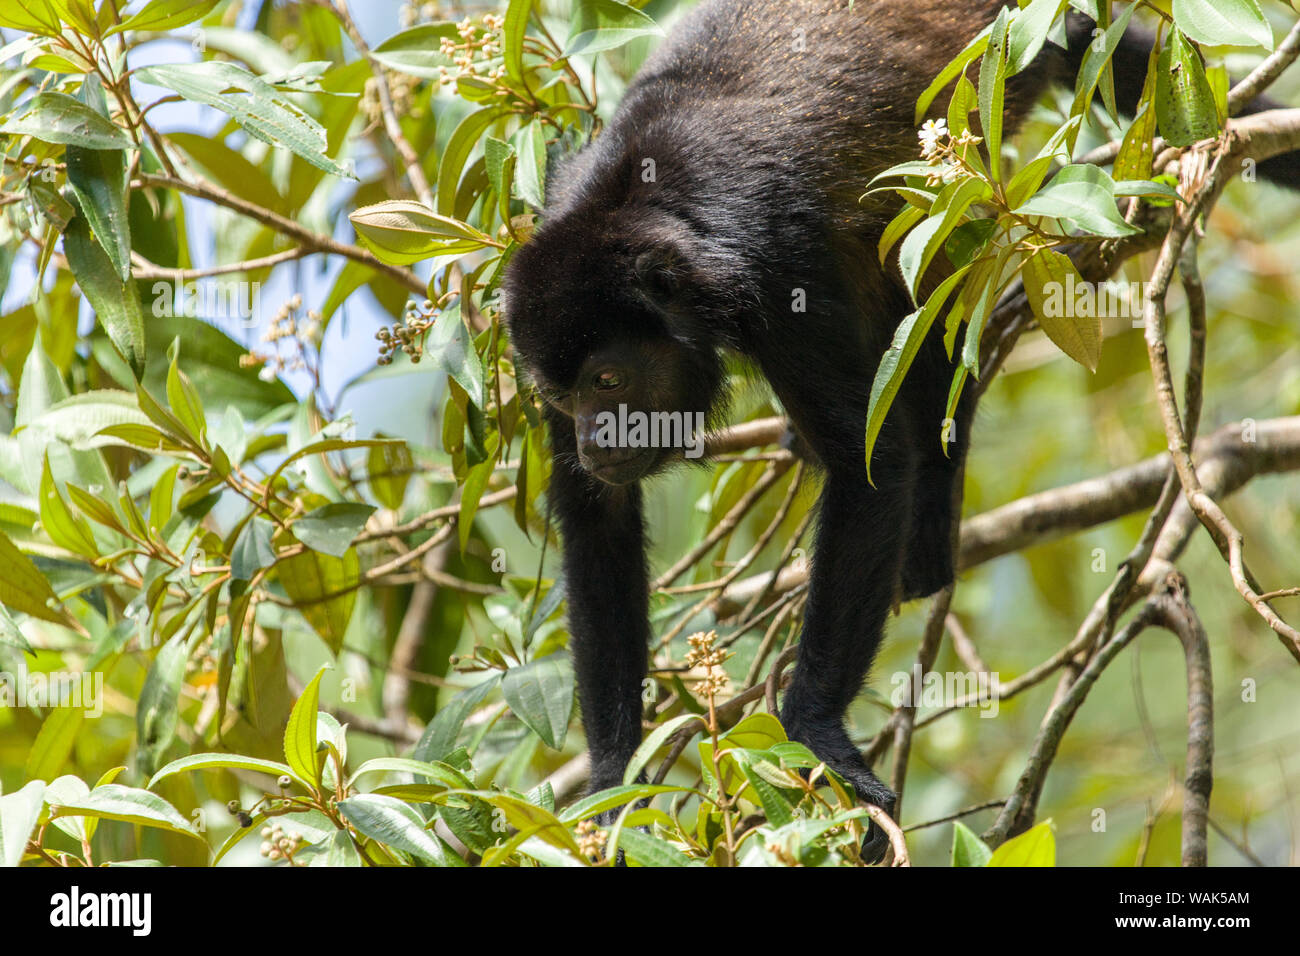 Tortuguero, Costa Rica. Mantled howler monkey (Alouatta palliata) in the trees. Stock Photo